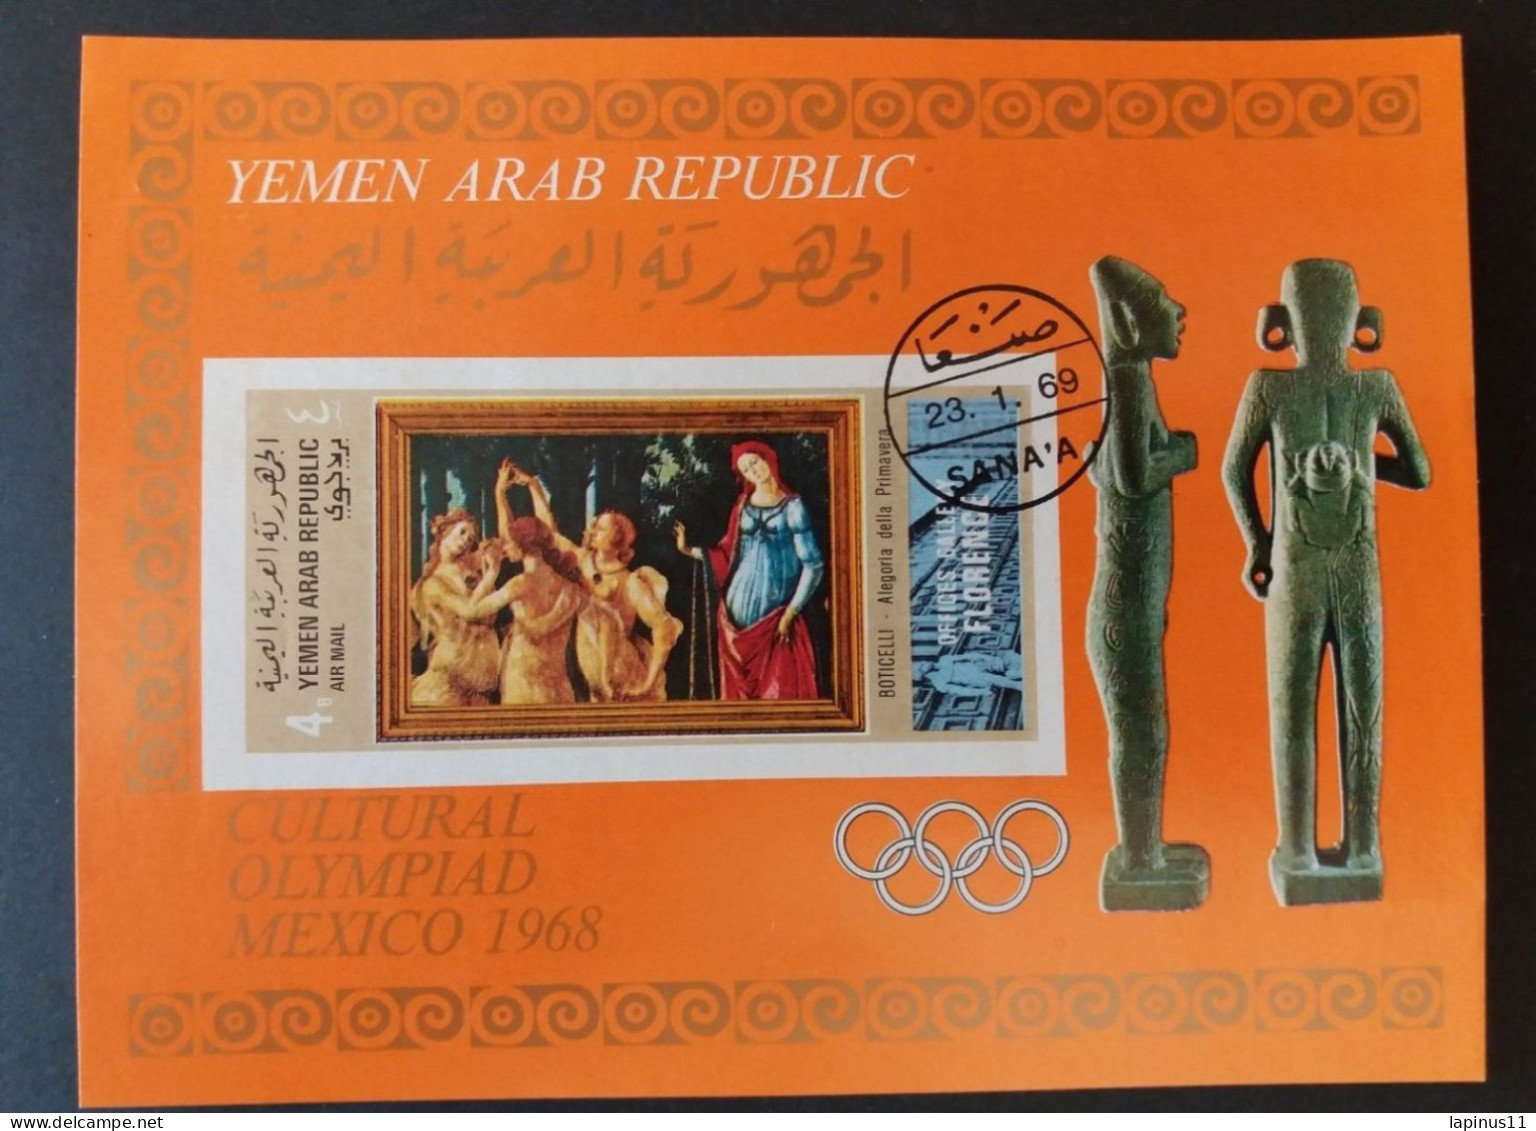 YEMEN يمني CULTURAL OLYMPIAD 1969 CAT MICHEL BLOCK N.95 (8825B) SHEET MNH $ - Yemen